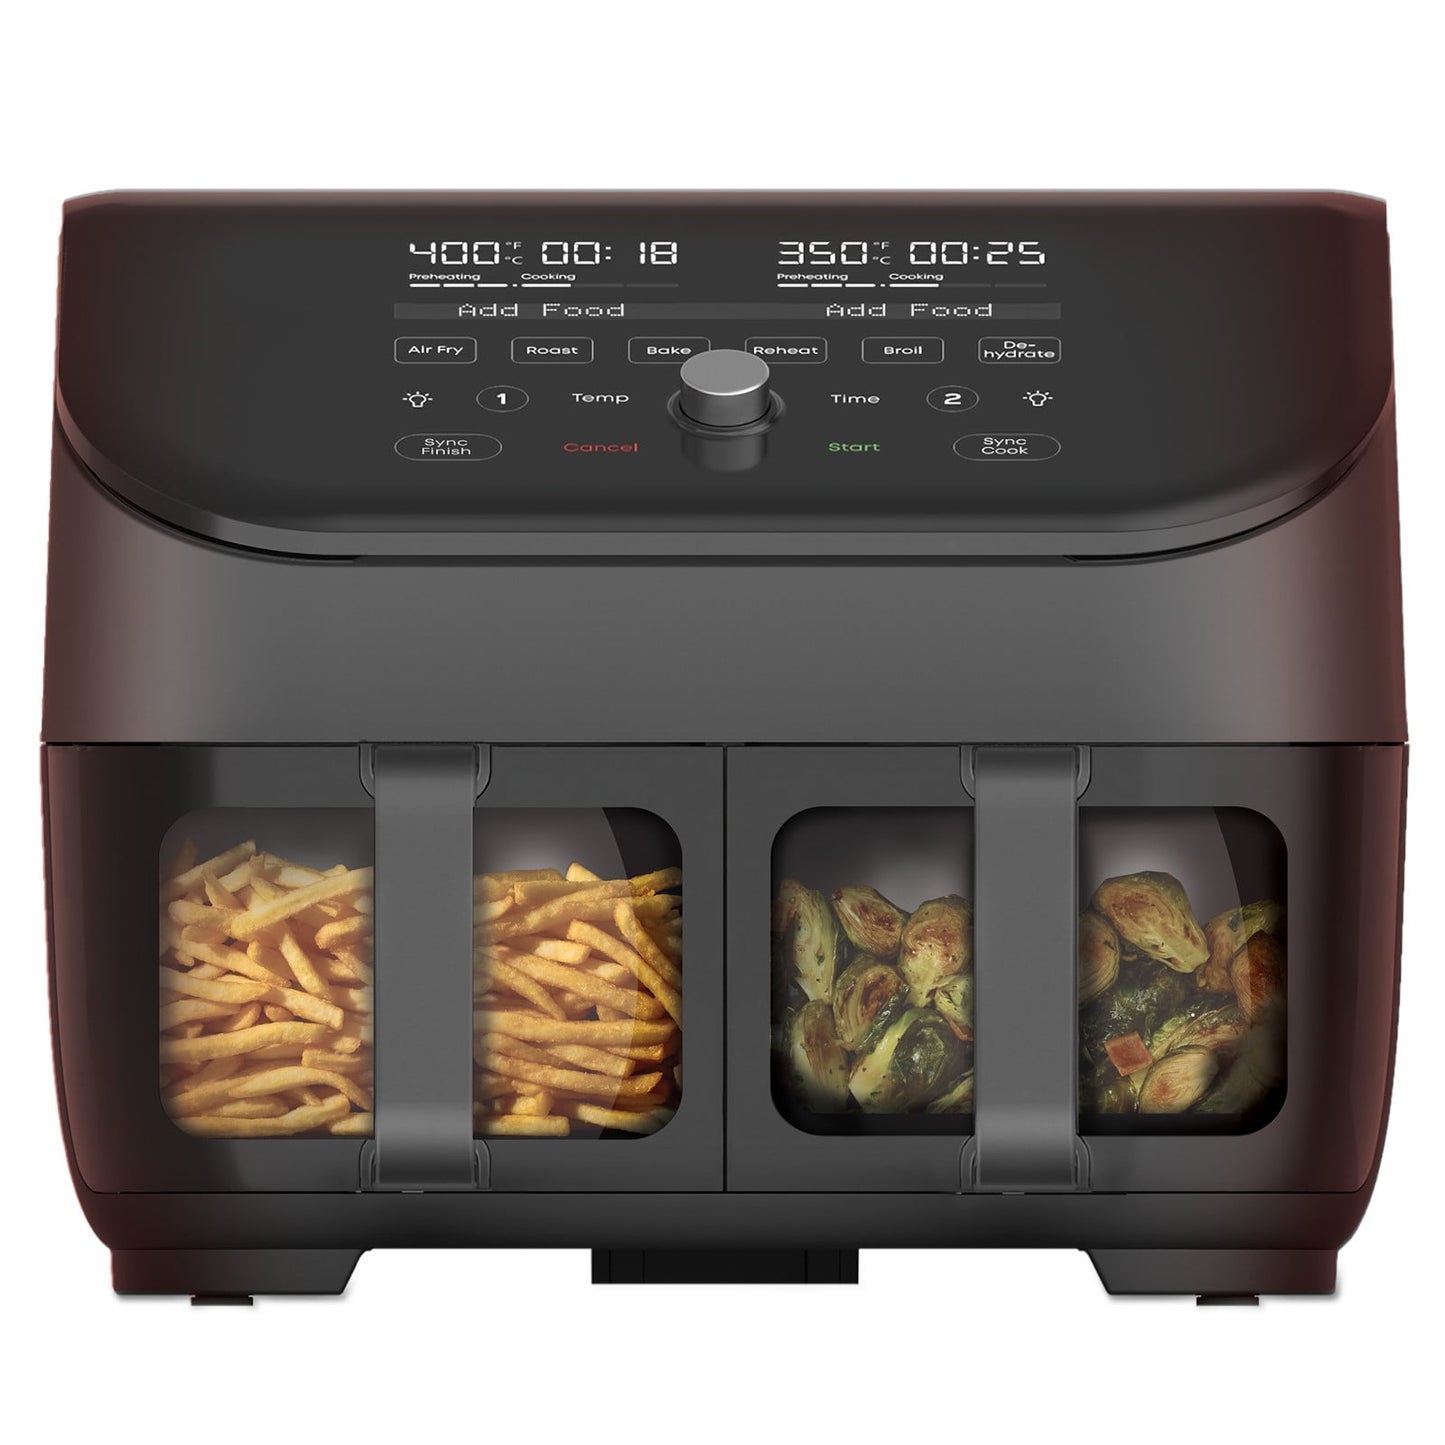 Instant Vortex Plus 8 qt 2-Basket Air Fryer Oven, Black - ClearCook Windows, Digital Touchscreen